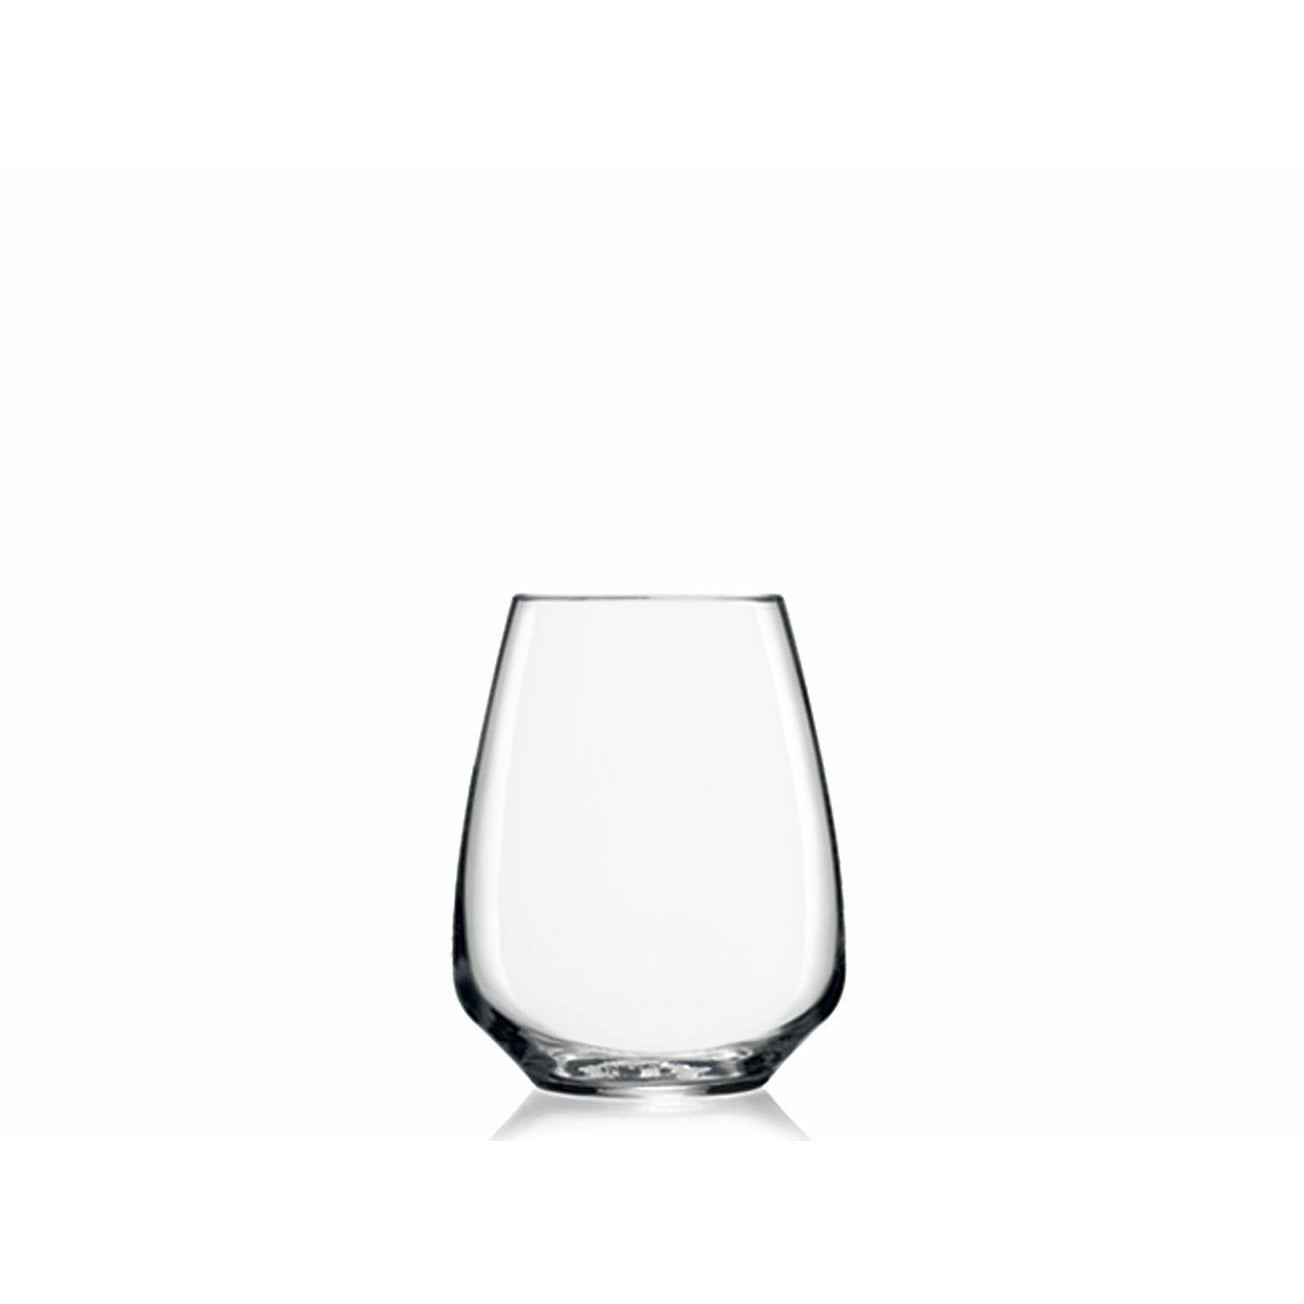 Luigi Bormioli Atelier Wasserglas/Weißweinglas, 2 Stück